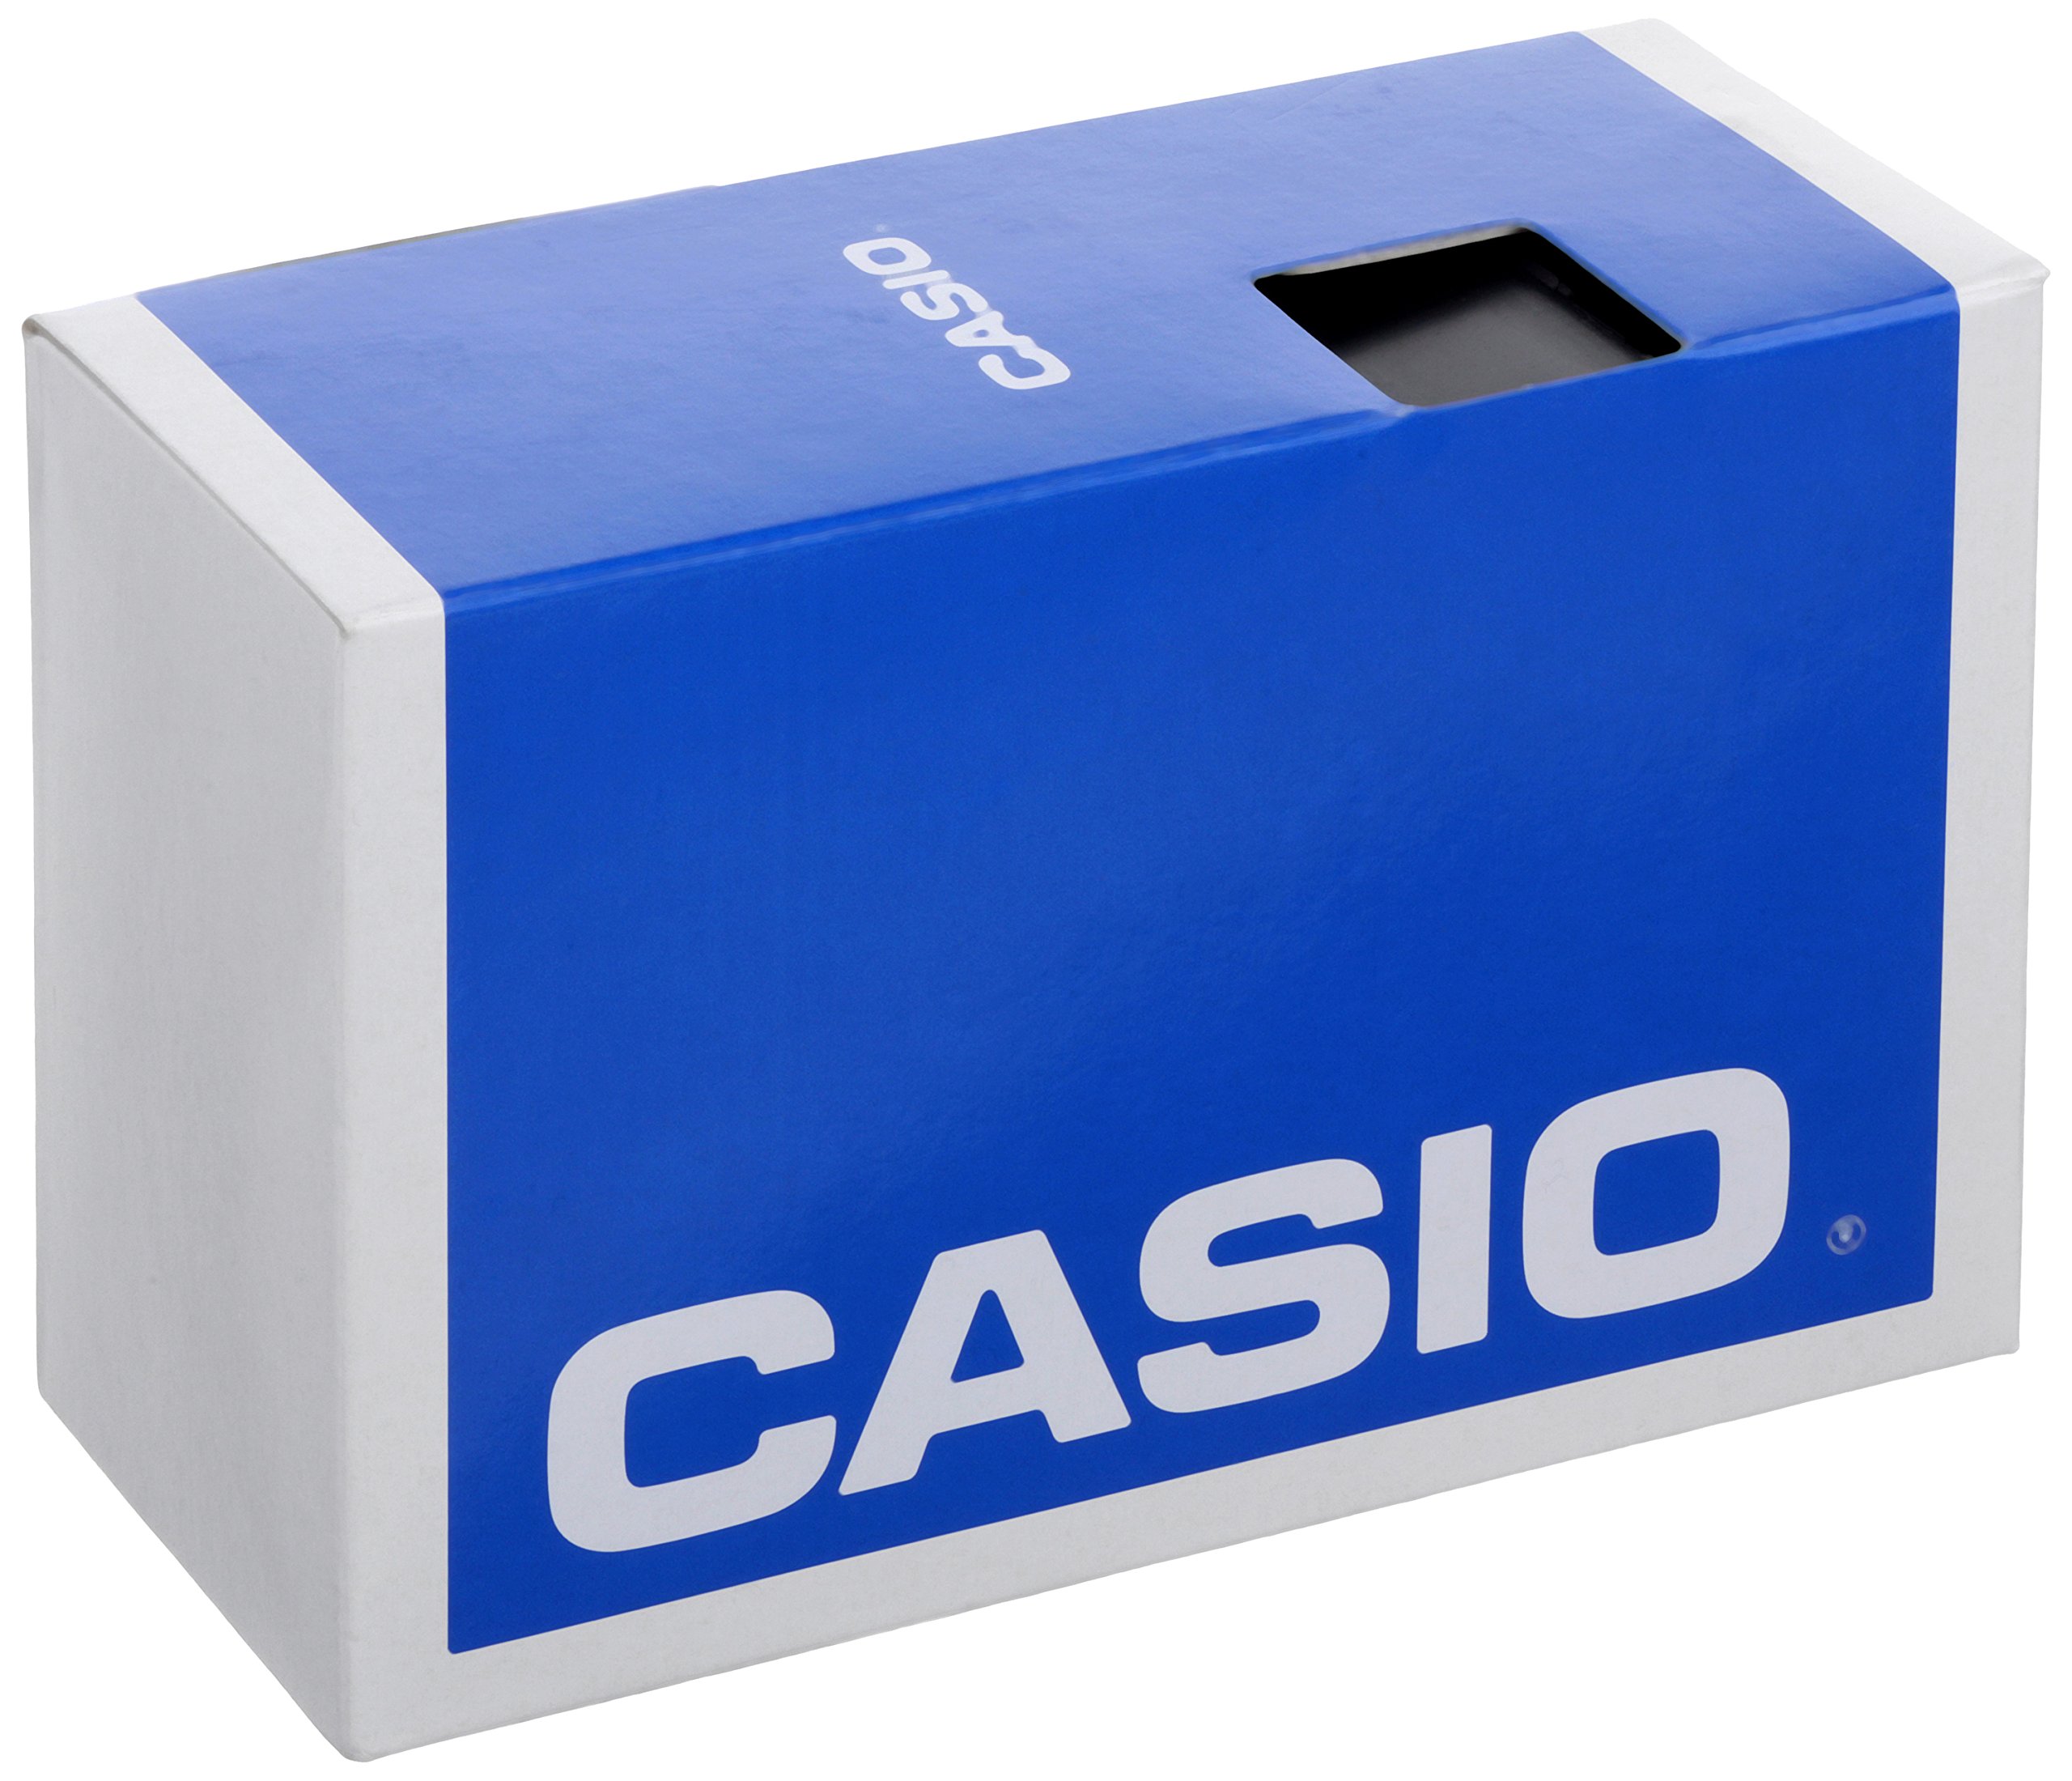 Casio Men's '10-Year Battery' Quartz Resin Watch,(Model: AE1000W-2AV)